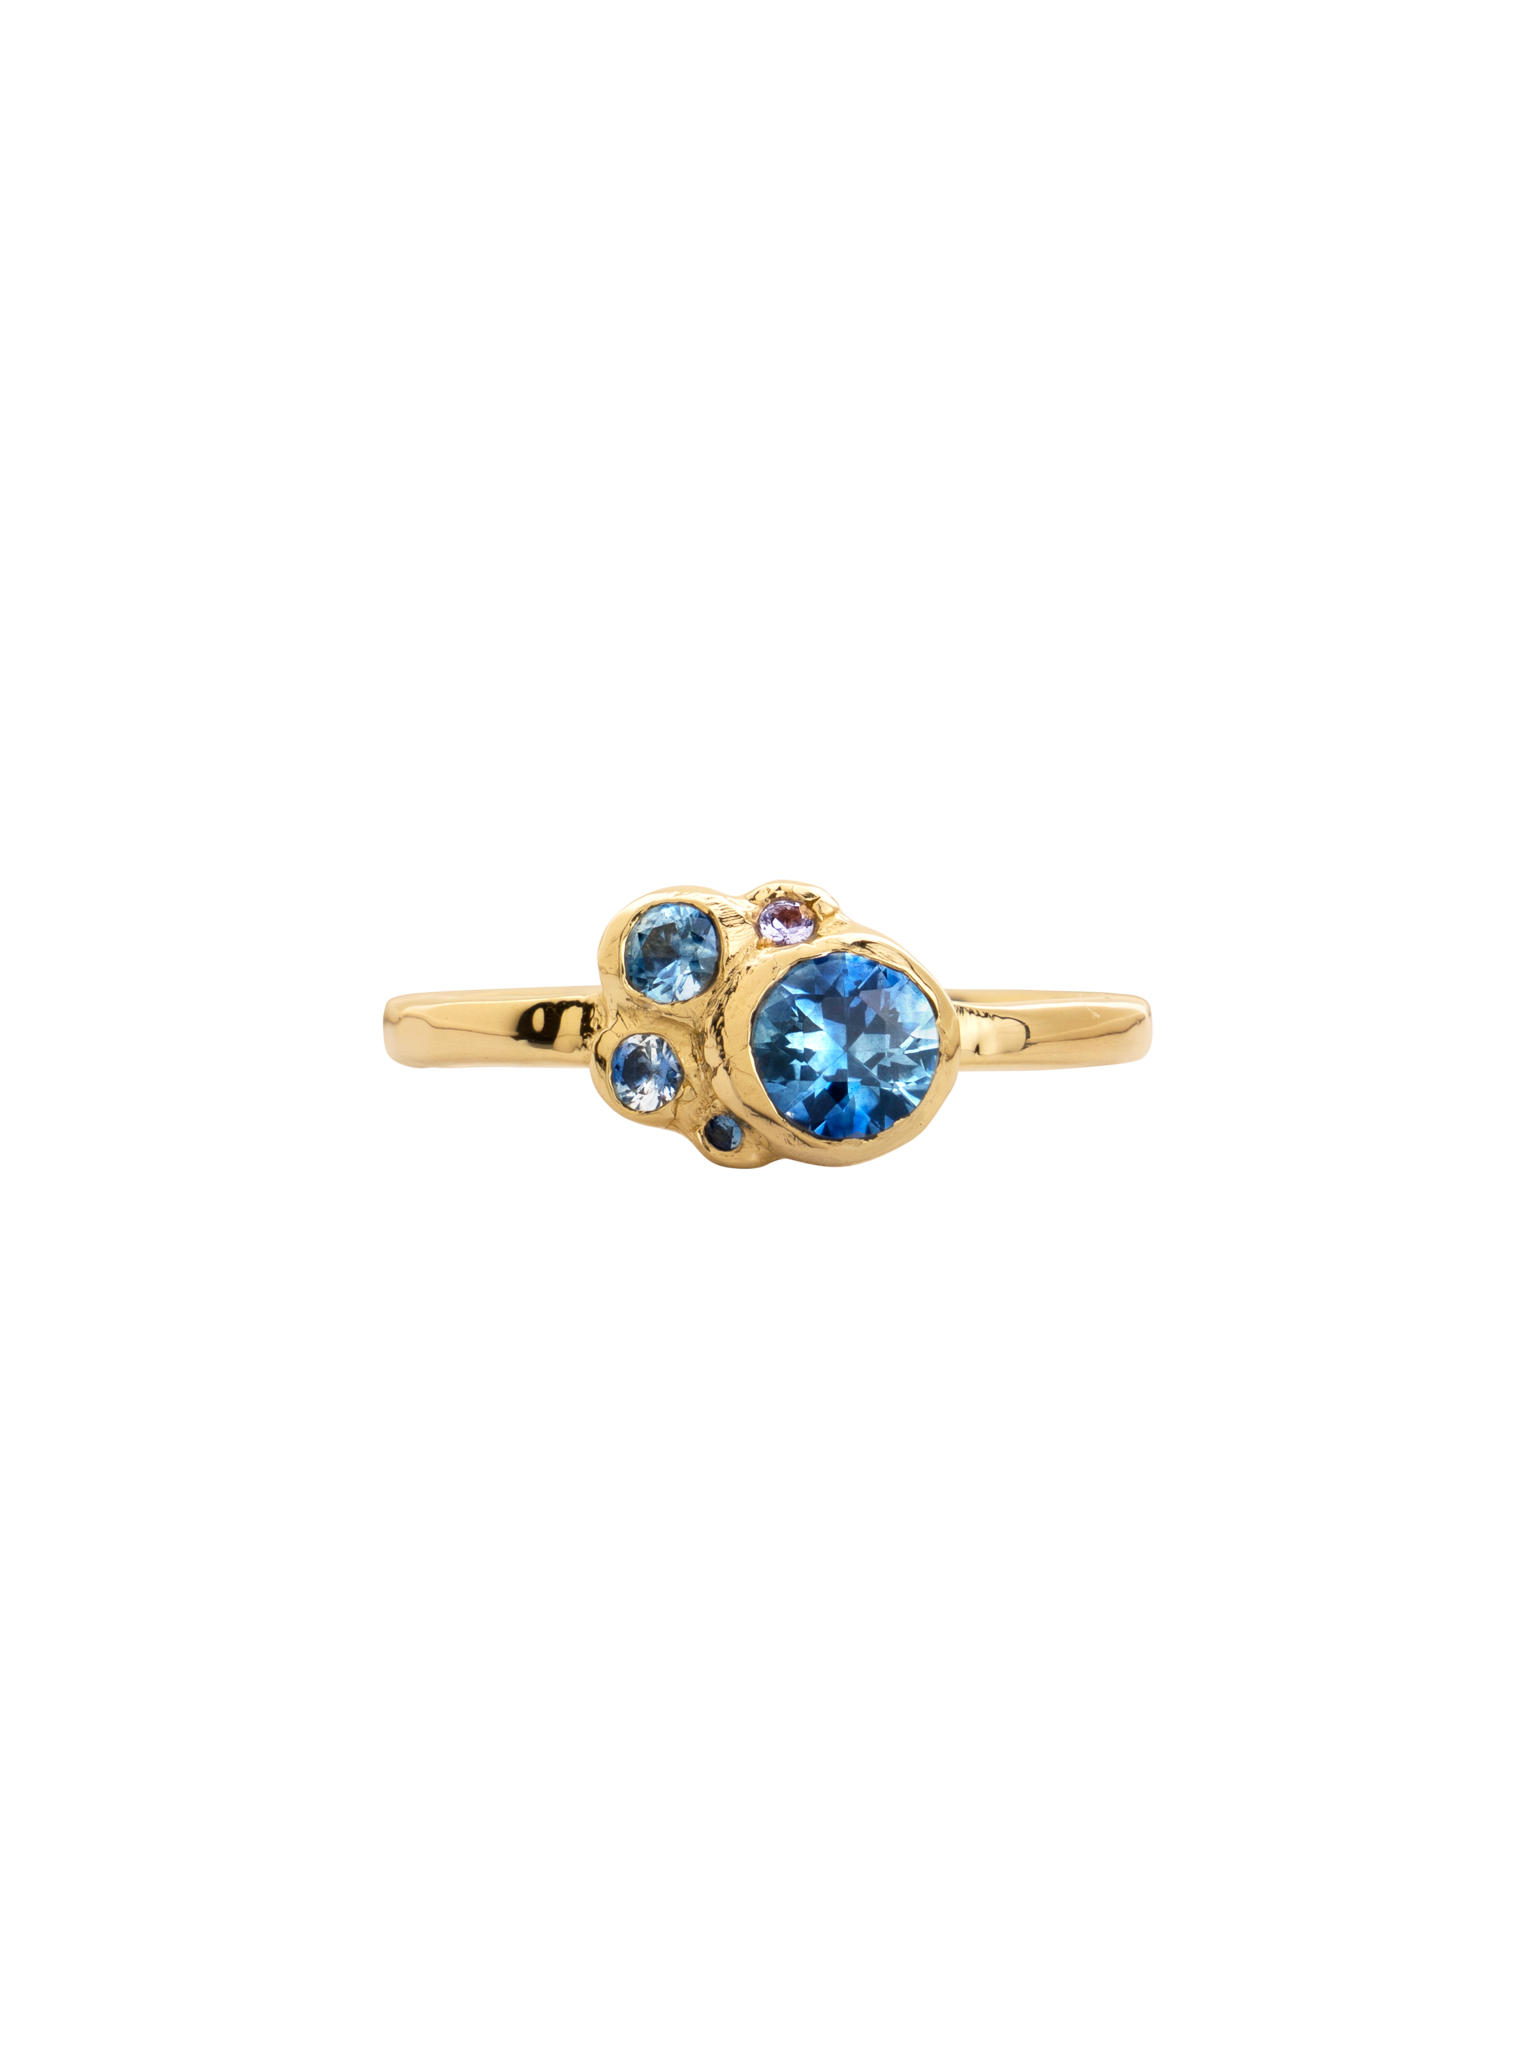 Harmonia sapphire ring